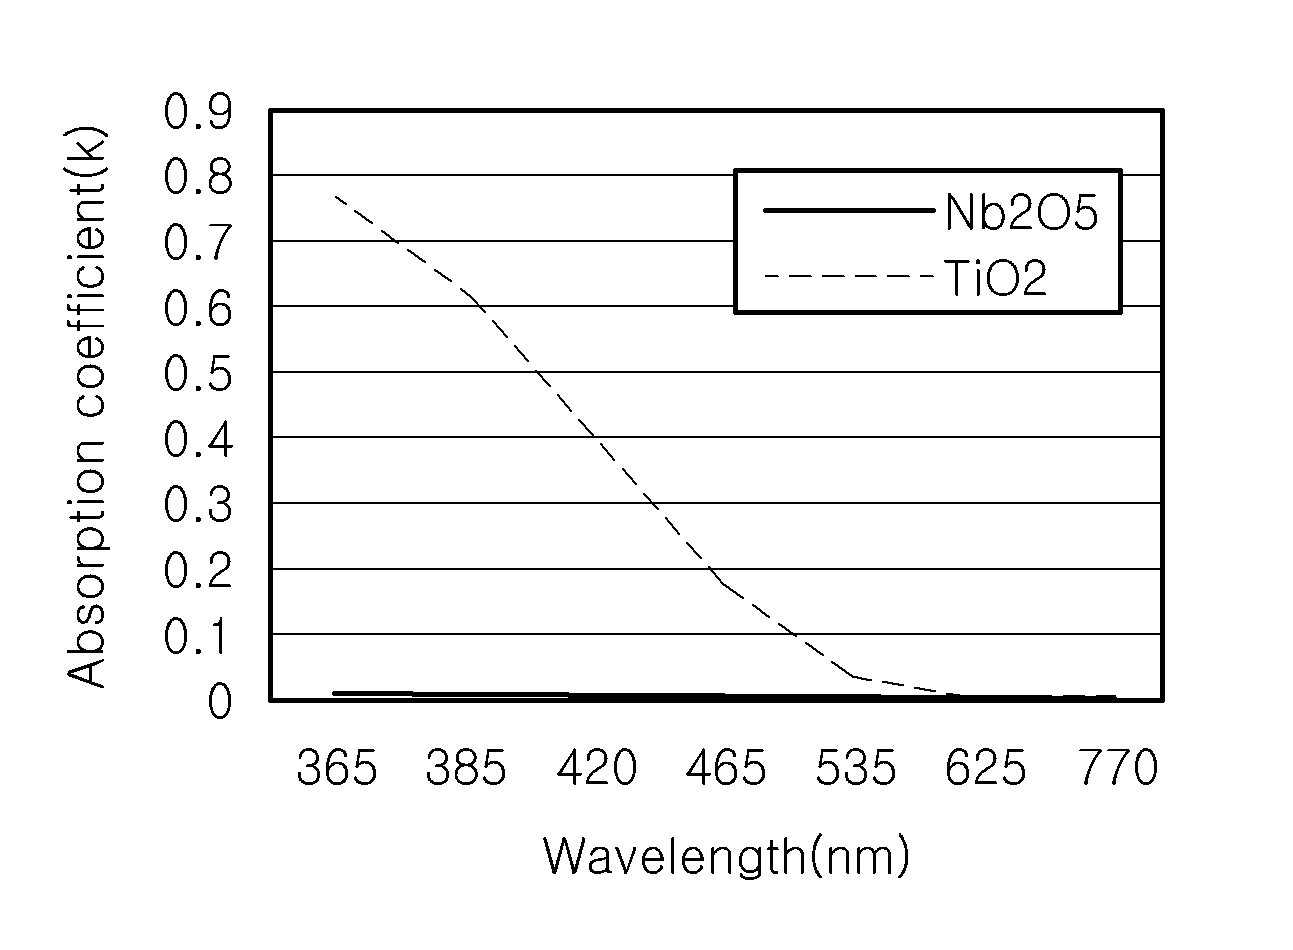 Light emitting diode having distributed bragg reflector